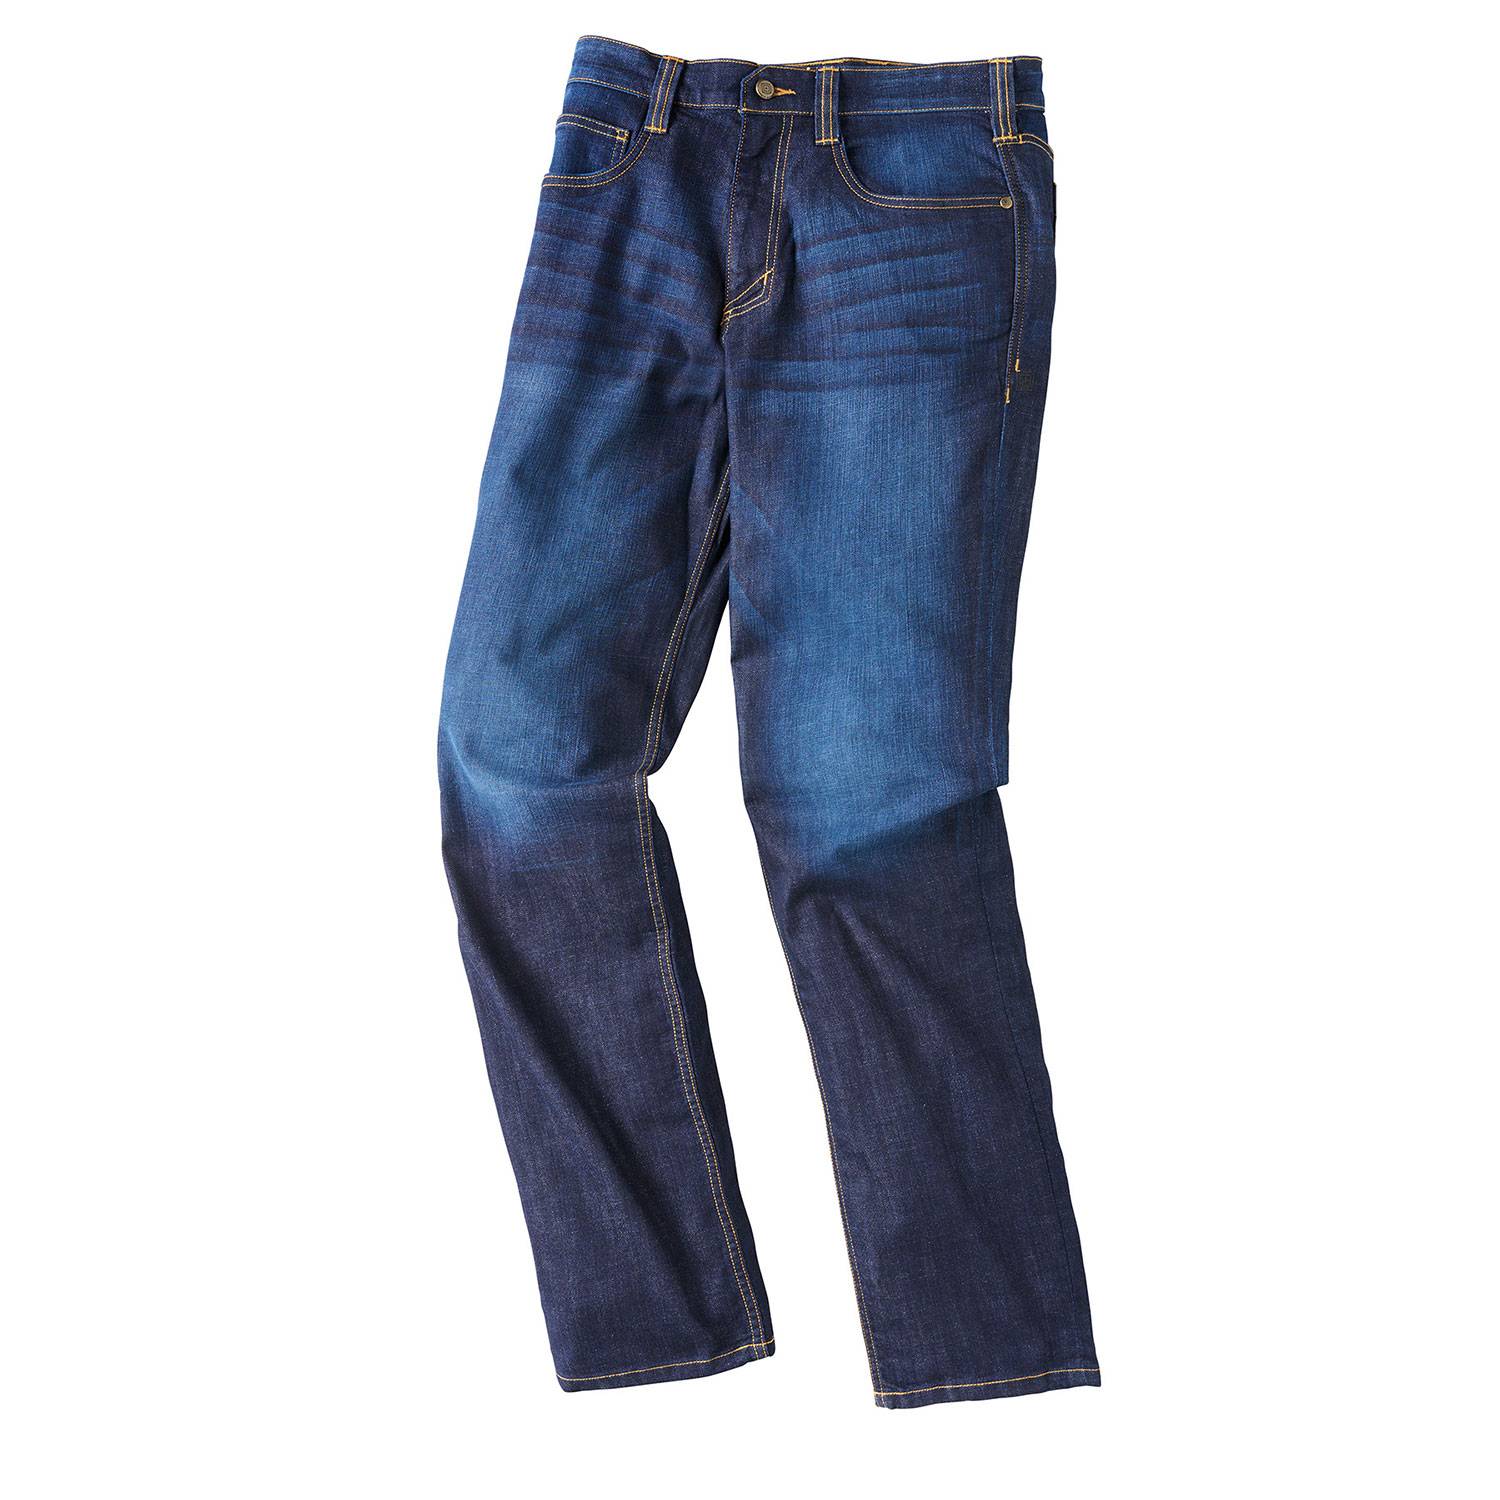 5.11 blue jeans